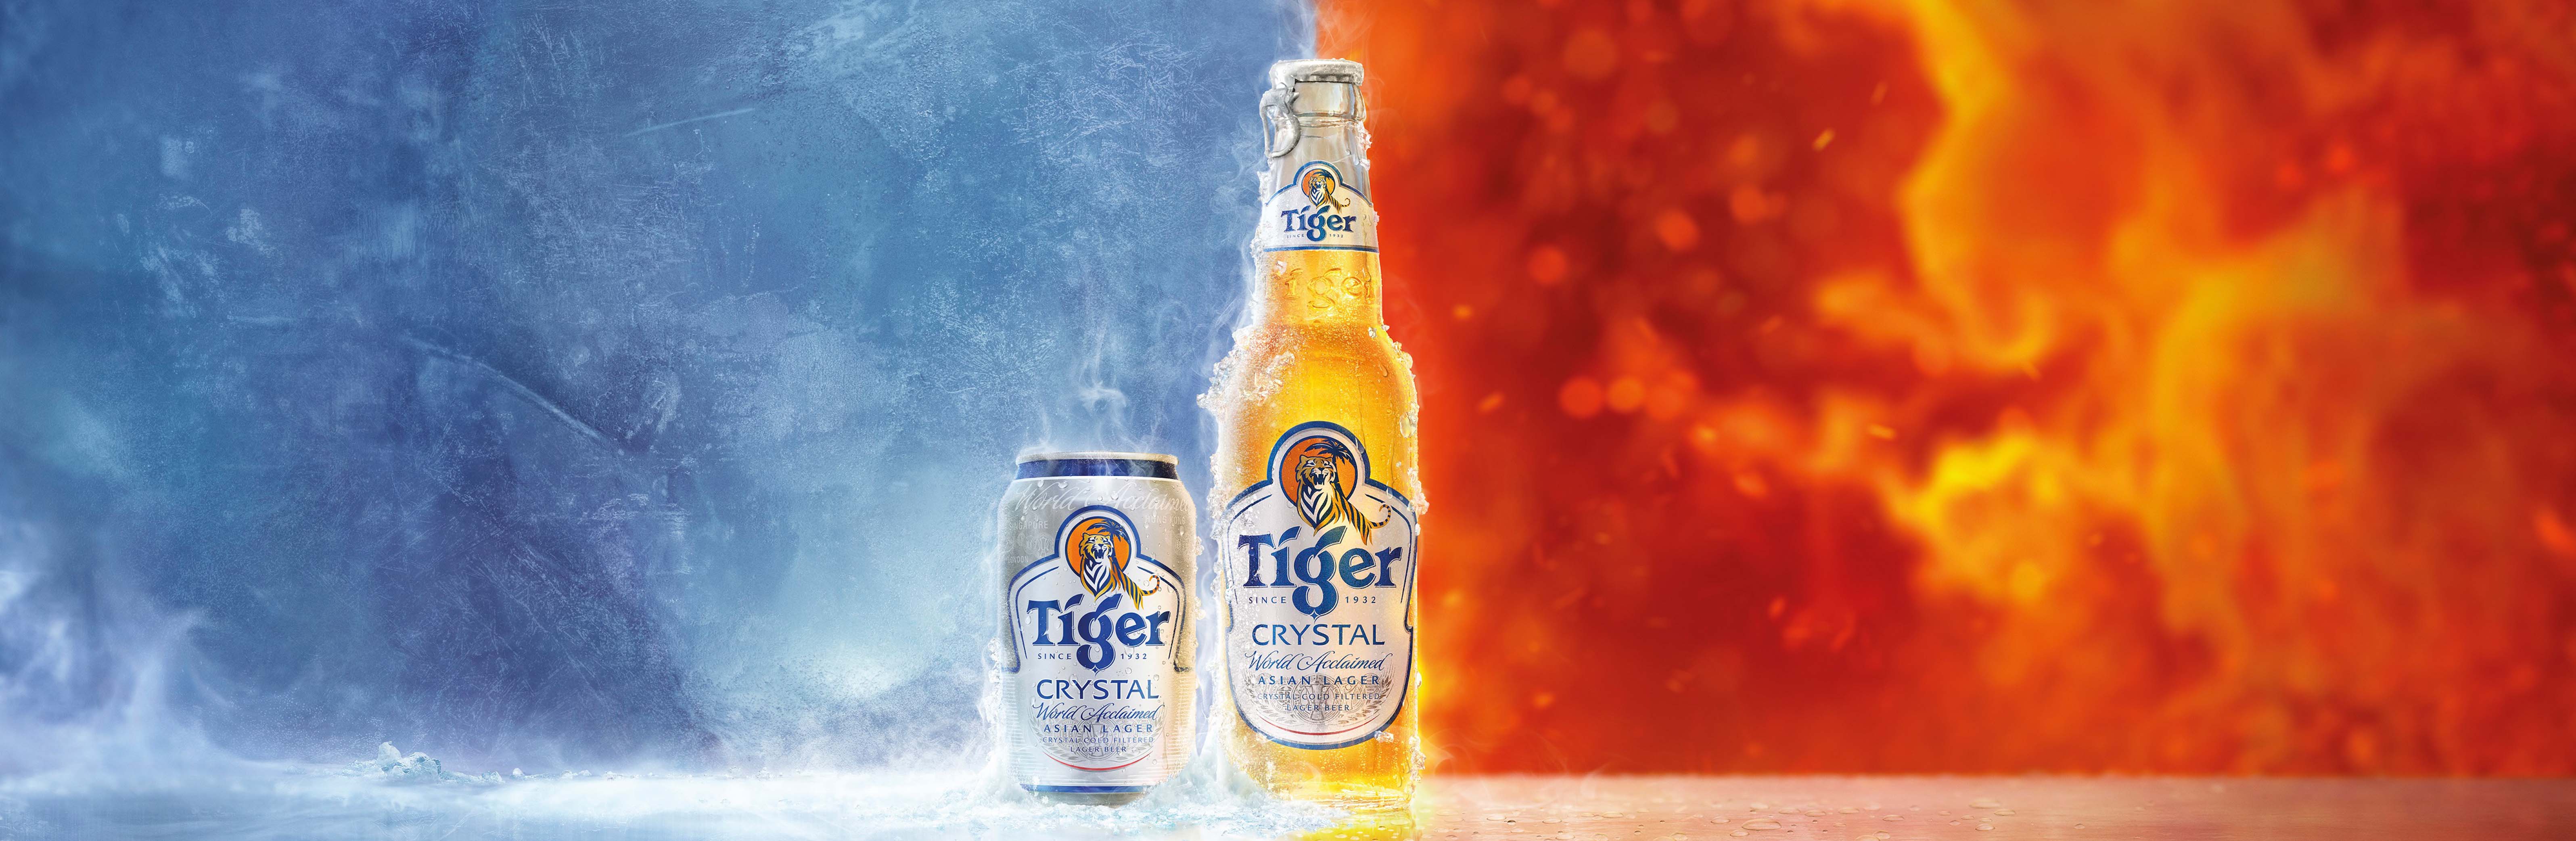 Press Release - Tiger Crystal Fire Starter-01